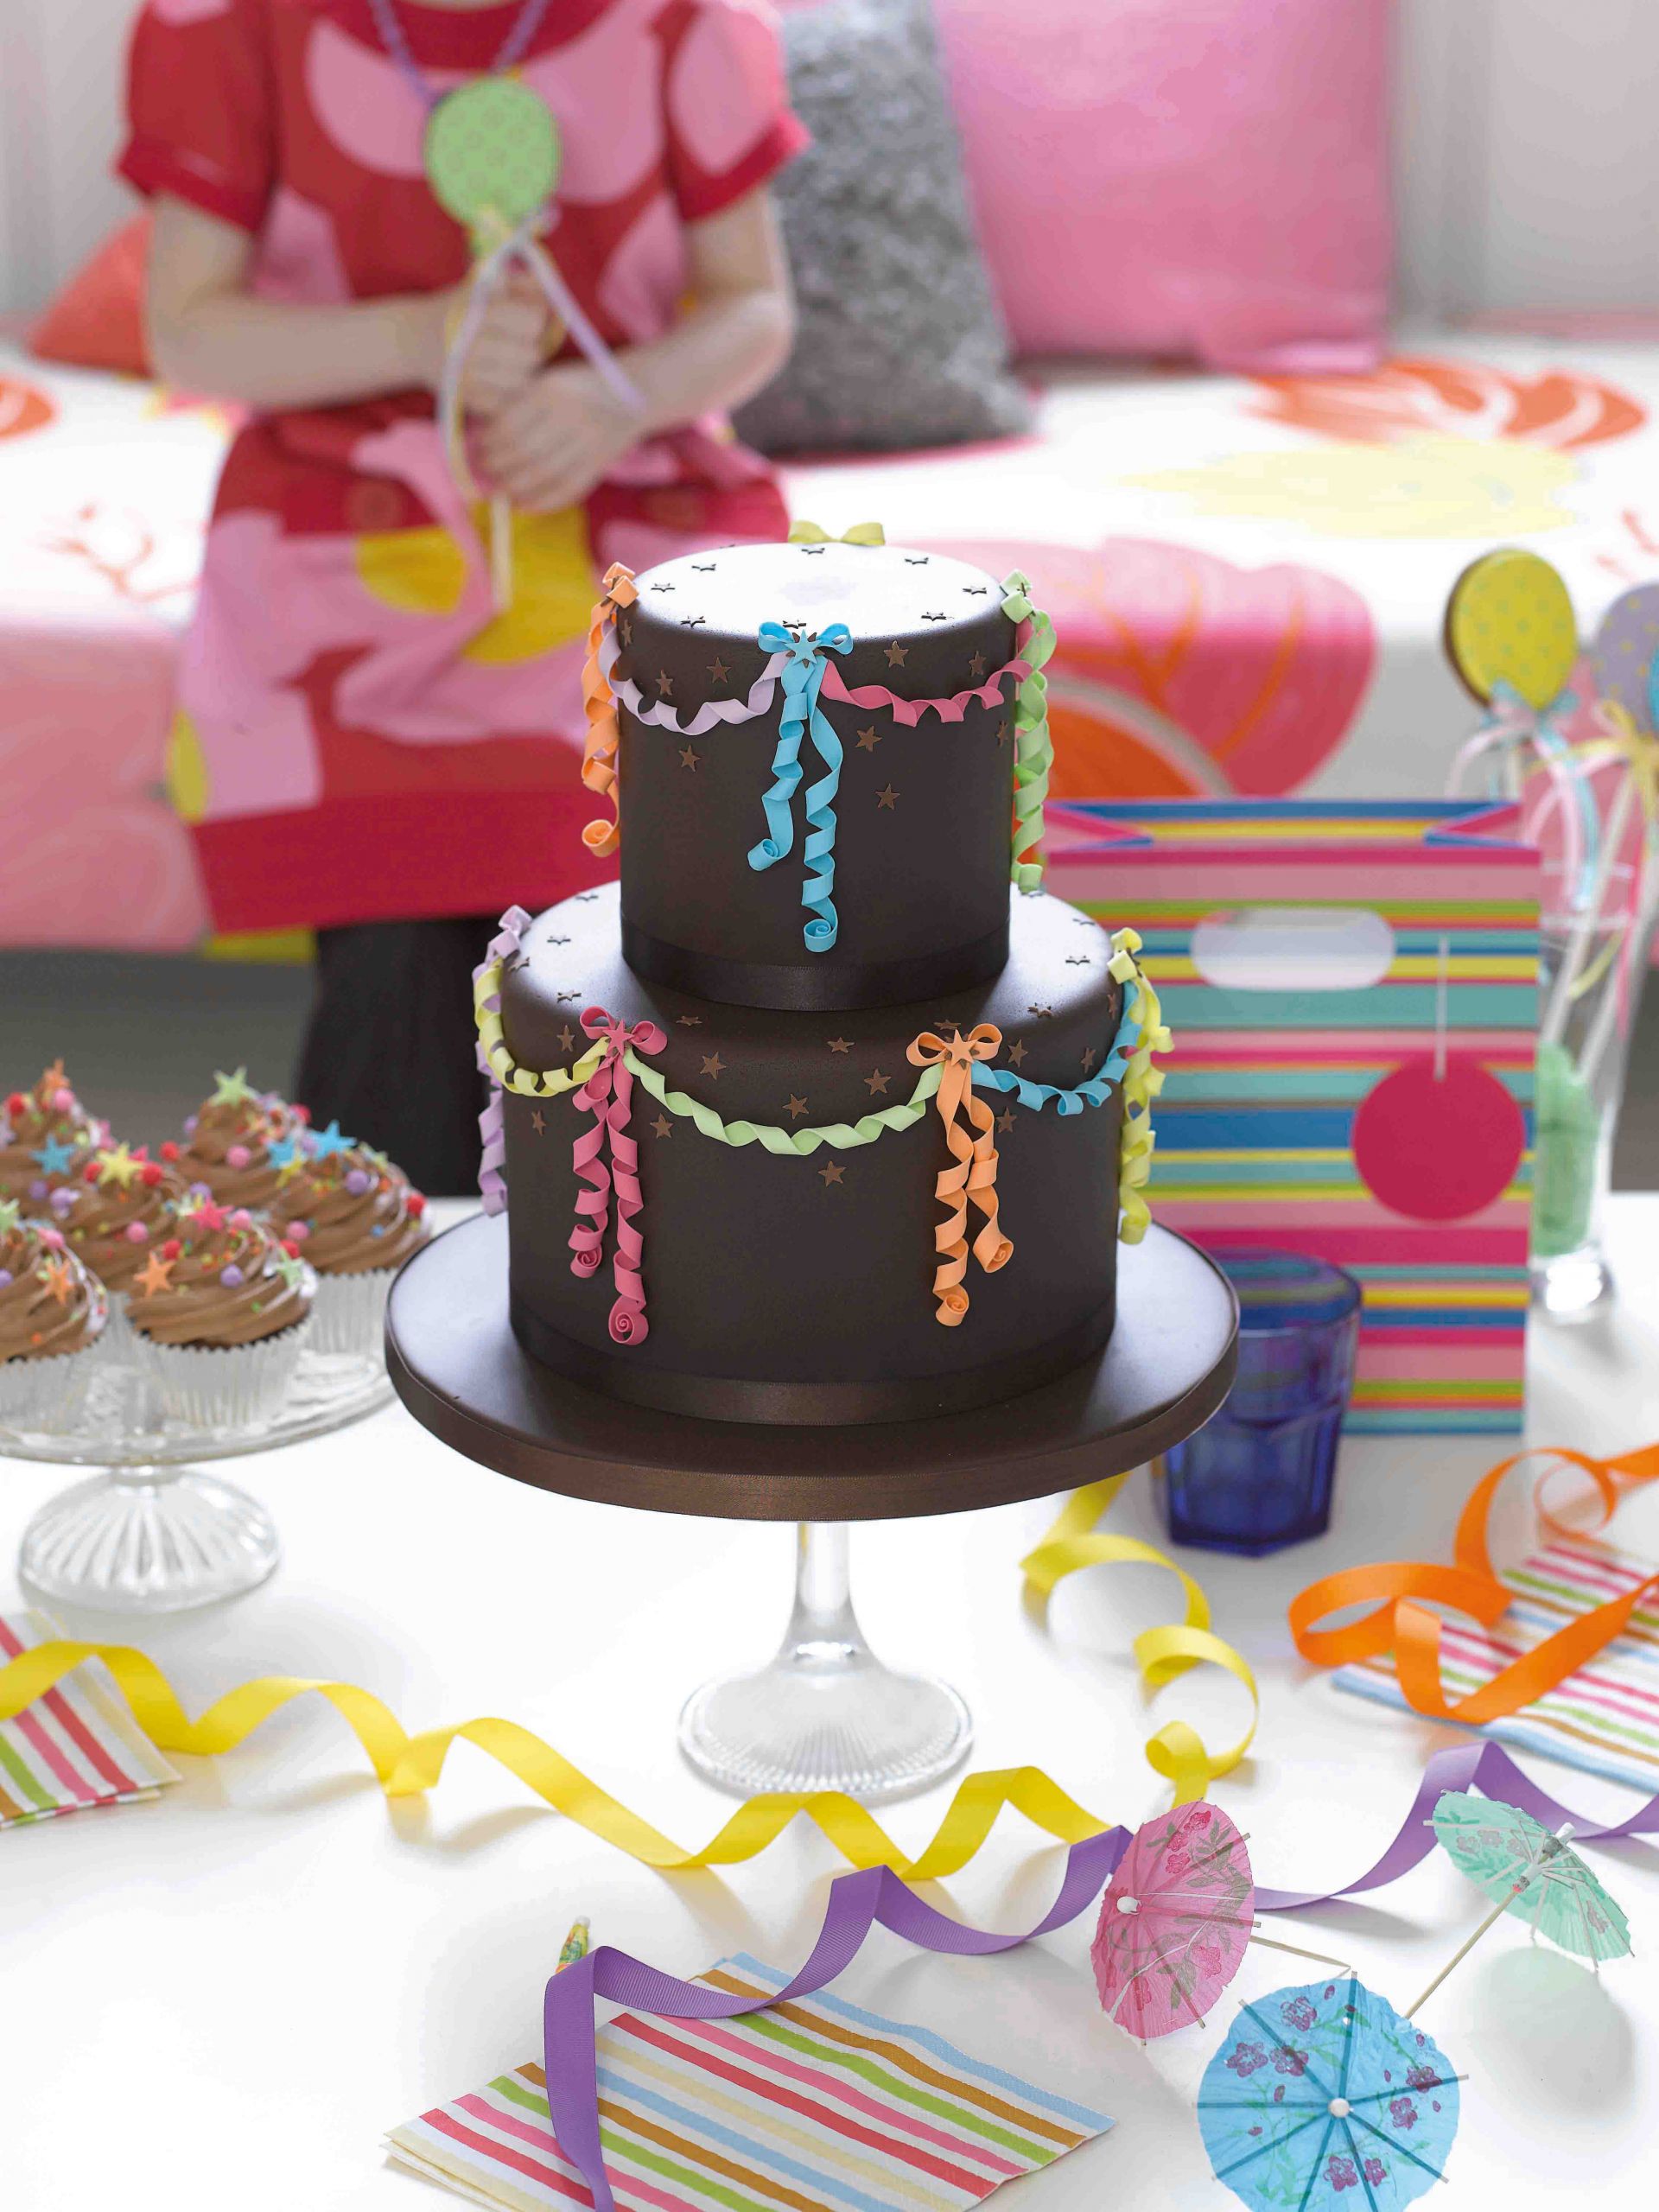 Images Of A Birthday Cake
 Celebration Cakes Birthday Cakes Novelty Cakes